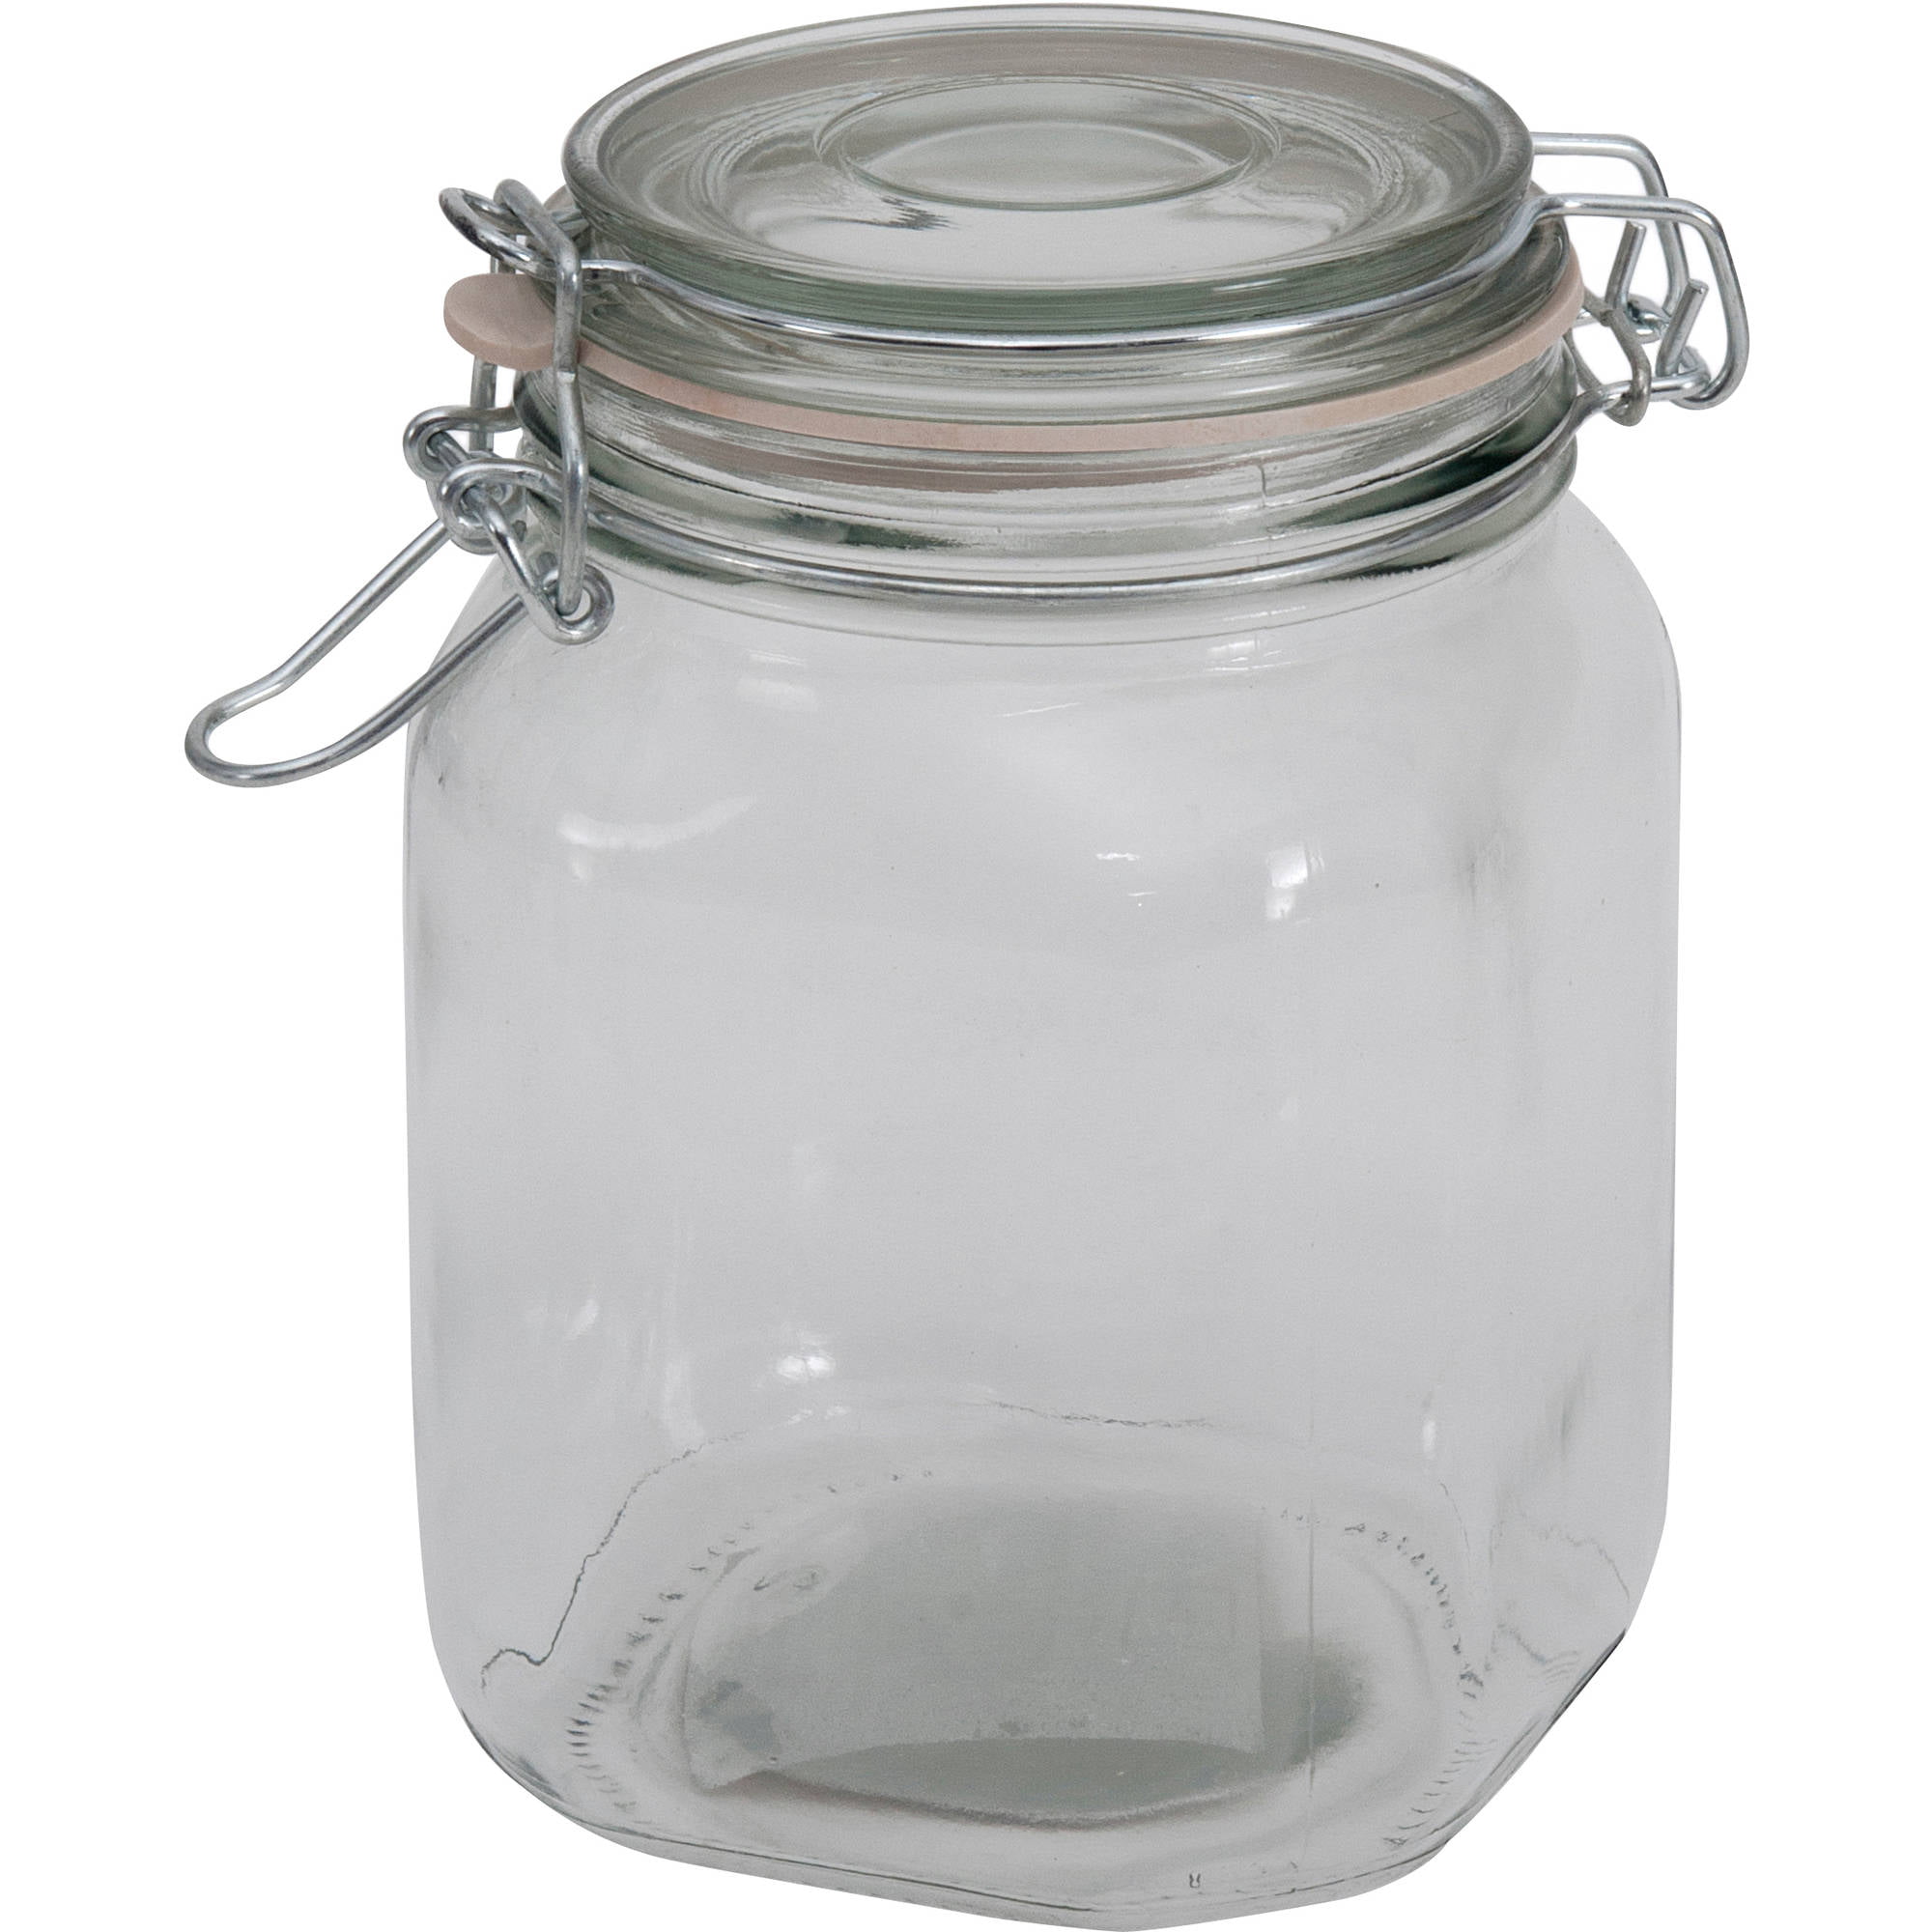 Mainstays 38 oz Clear Glass Jar with Clamp Lid - Walmart.com